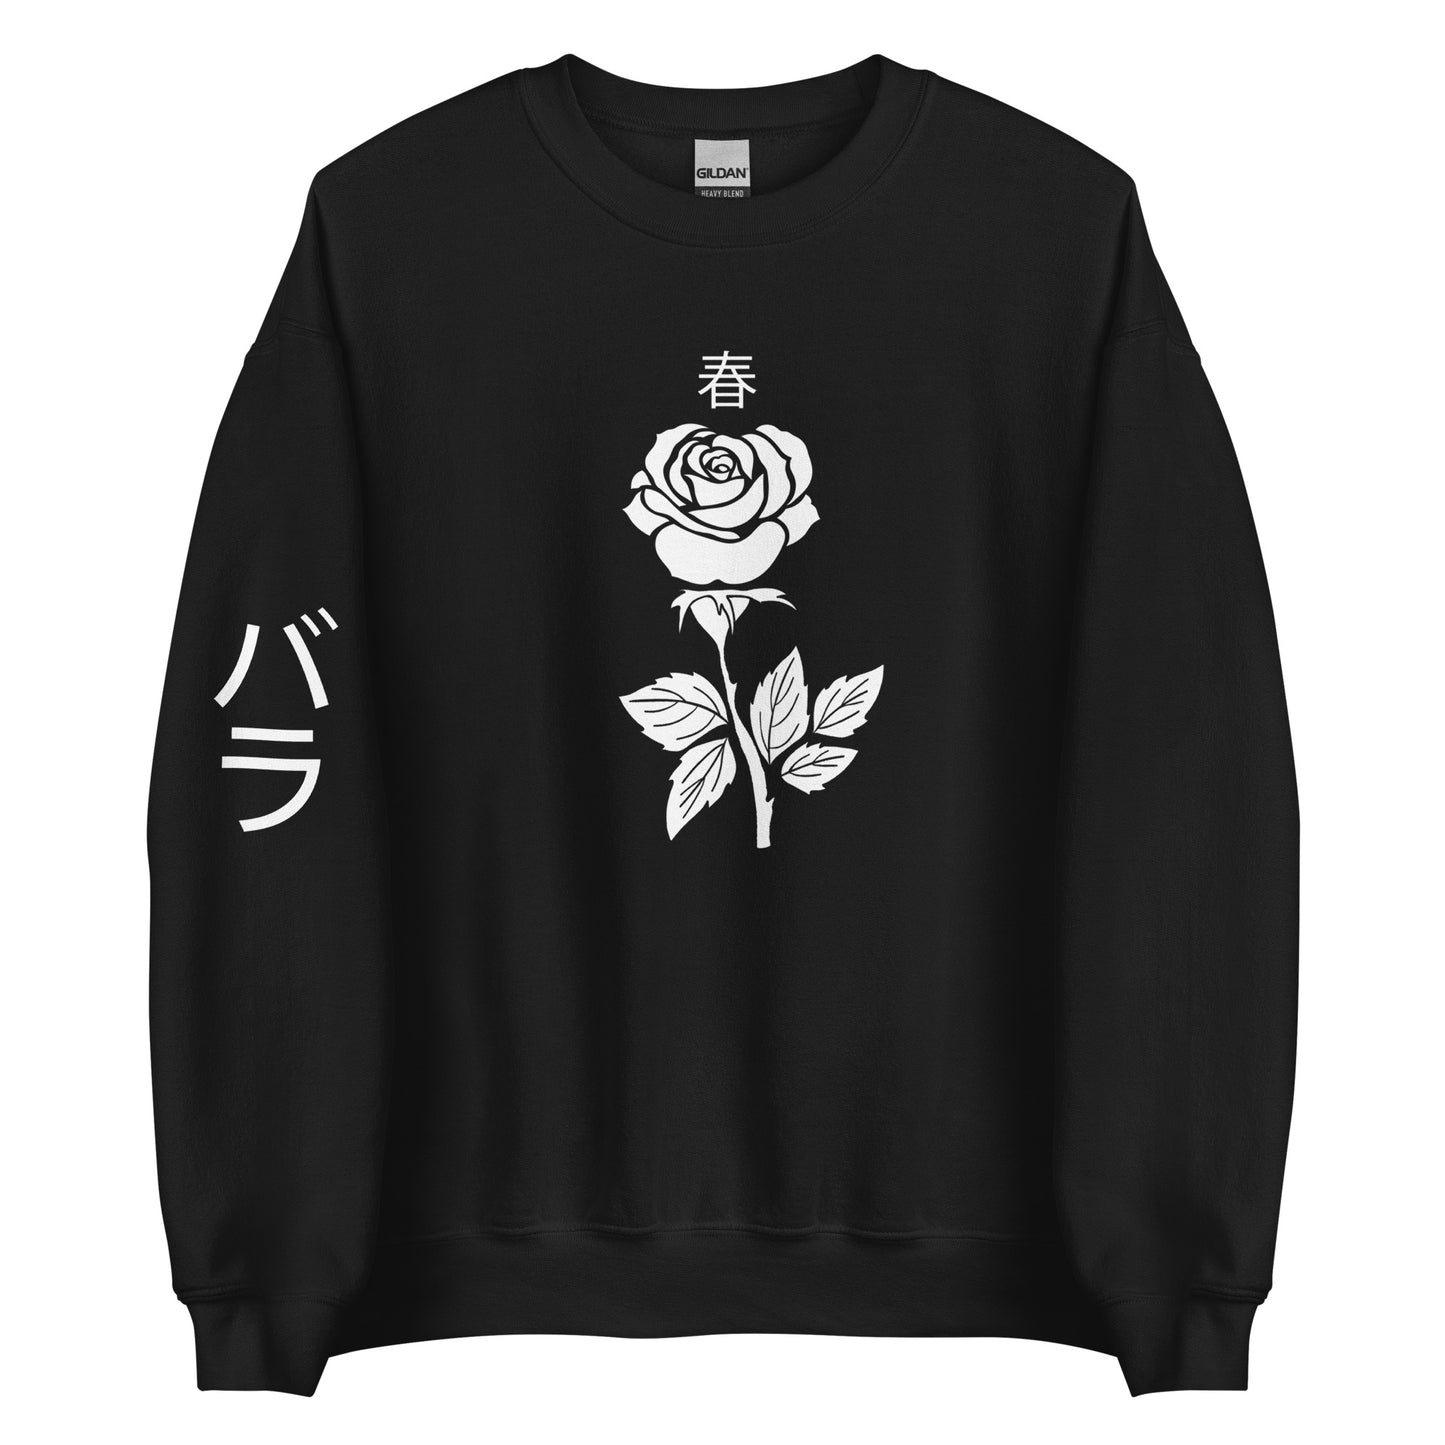 Rose sweatshirt for women pocket alternative aesthetic cute women's Rose Flower Tee